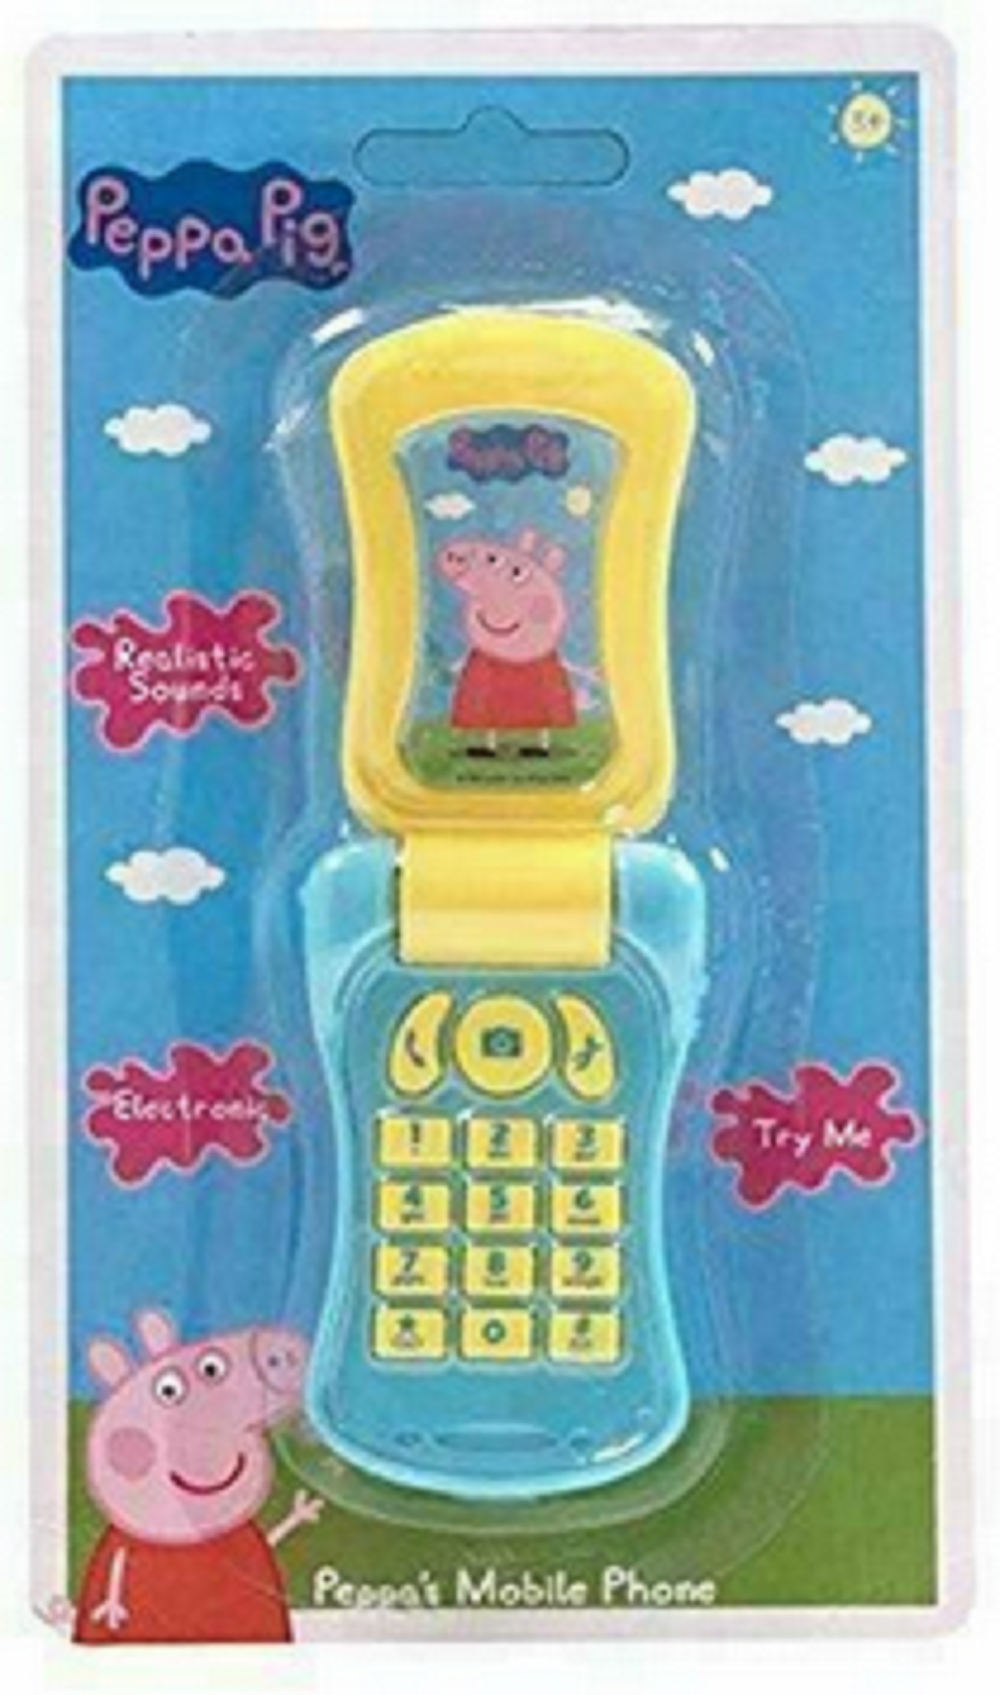 Peppa Pig Mobile Phone